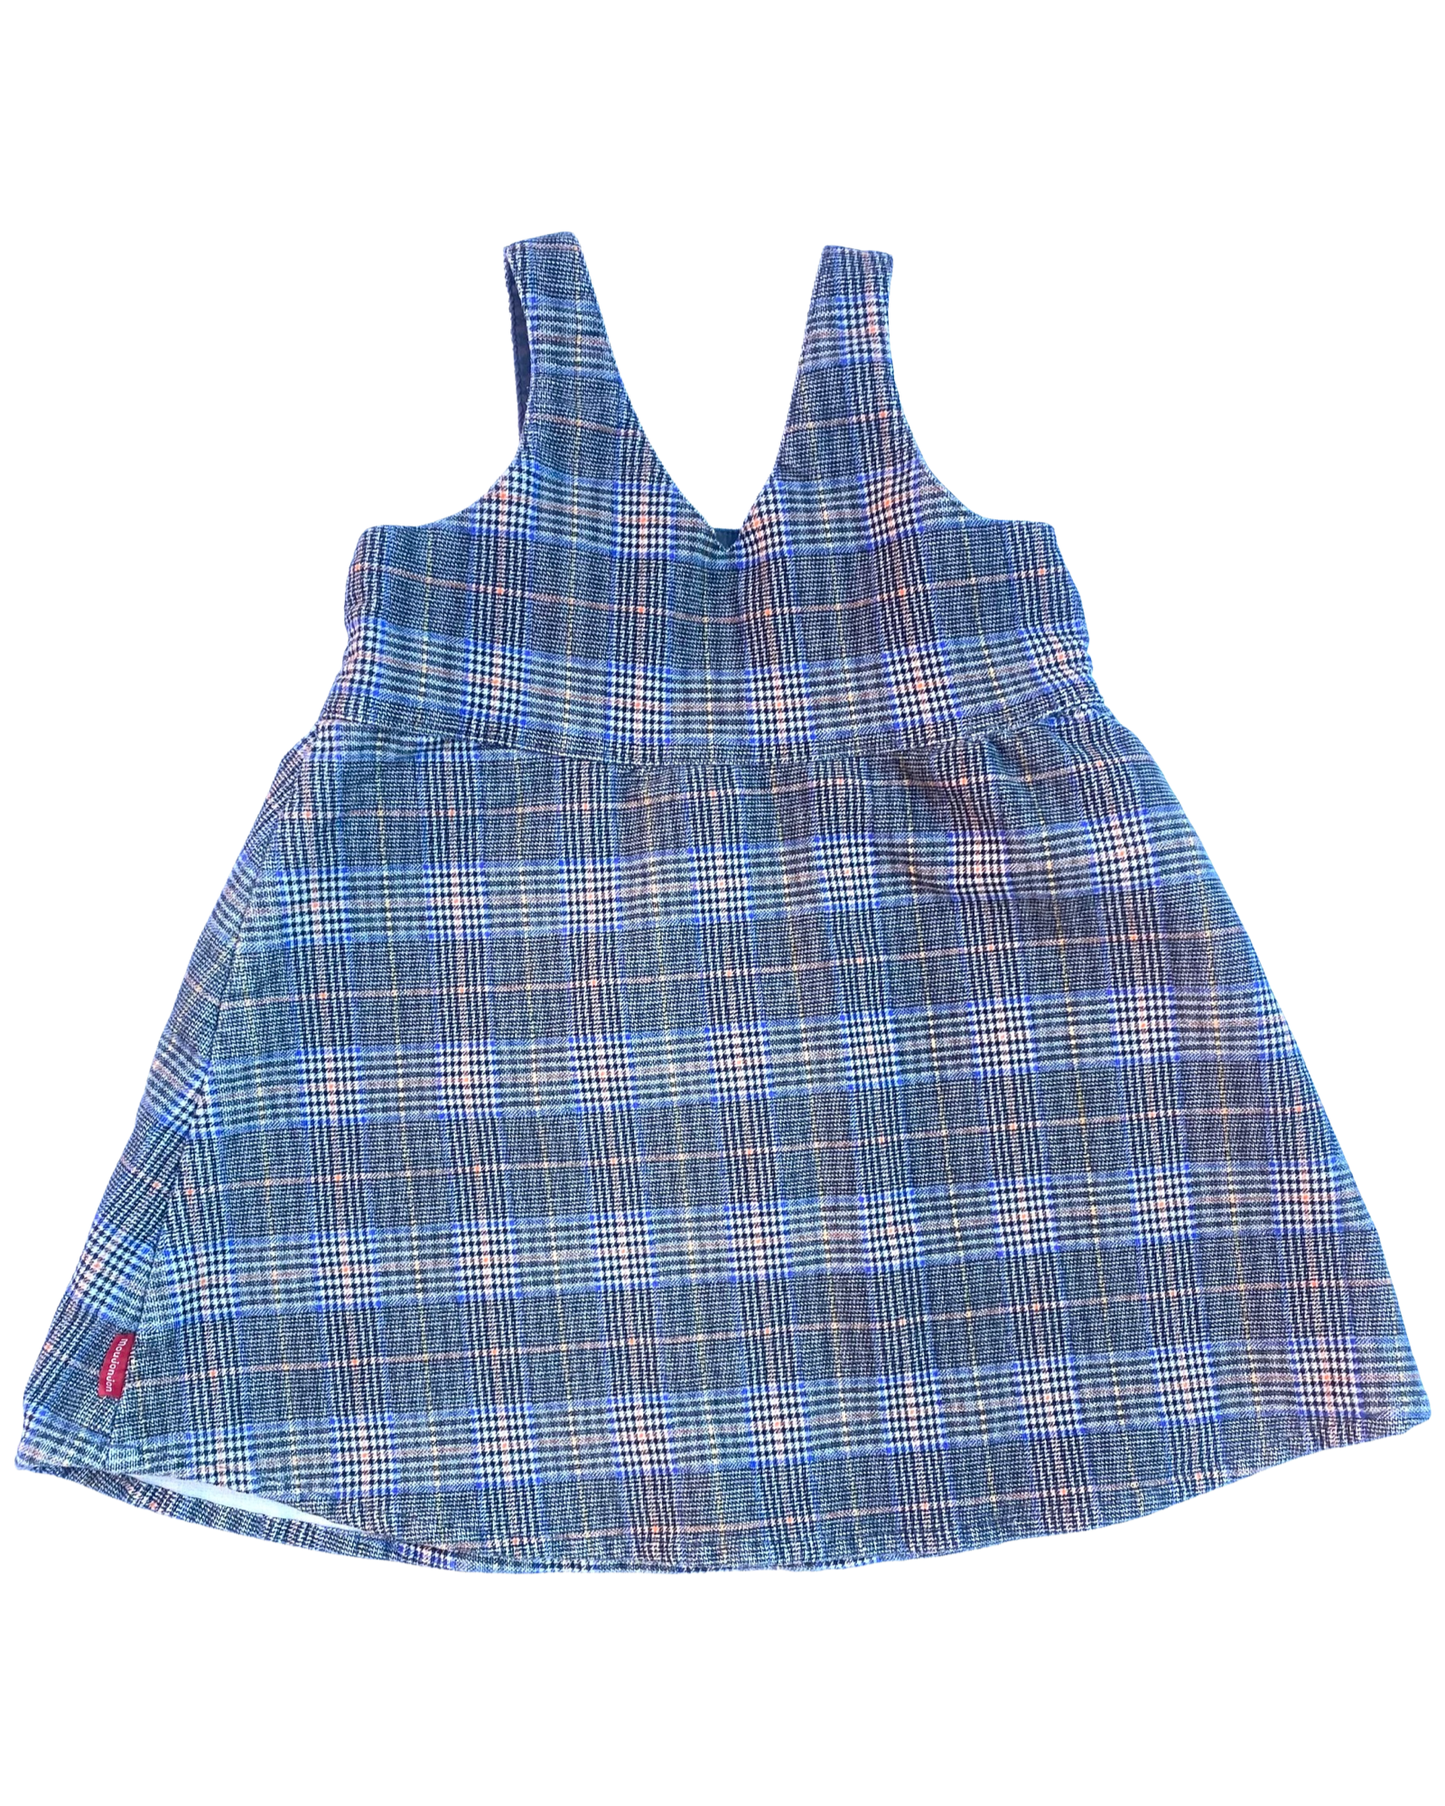 Monjonjon checked pinafore dress (size 3-4yrs)